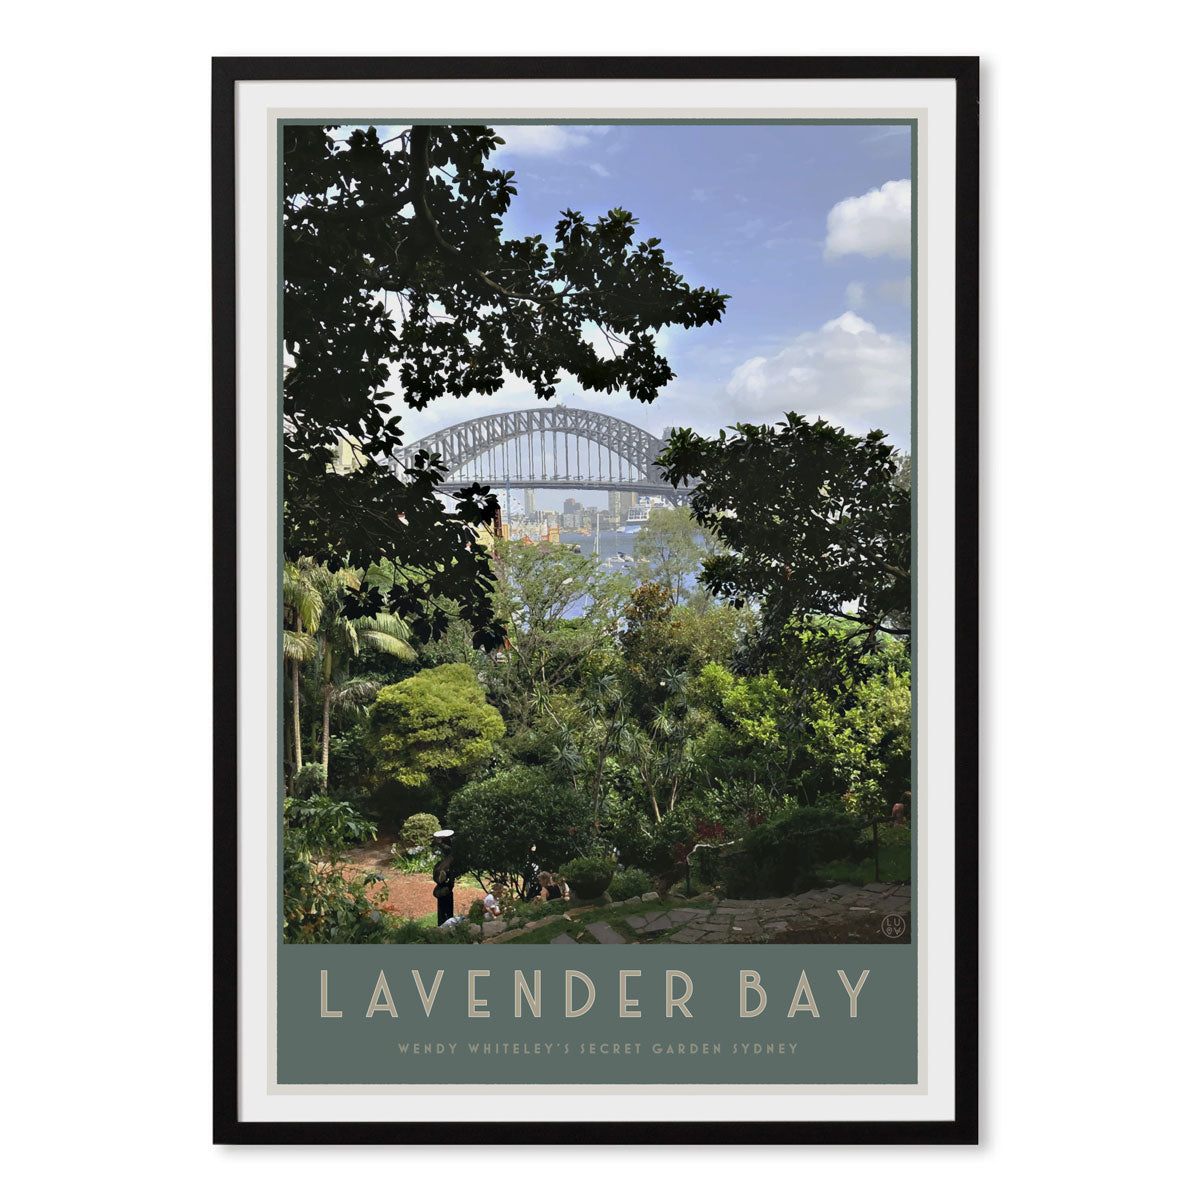 Lavender Bay vintage style travel black framed print by places we luv